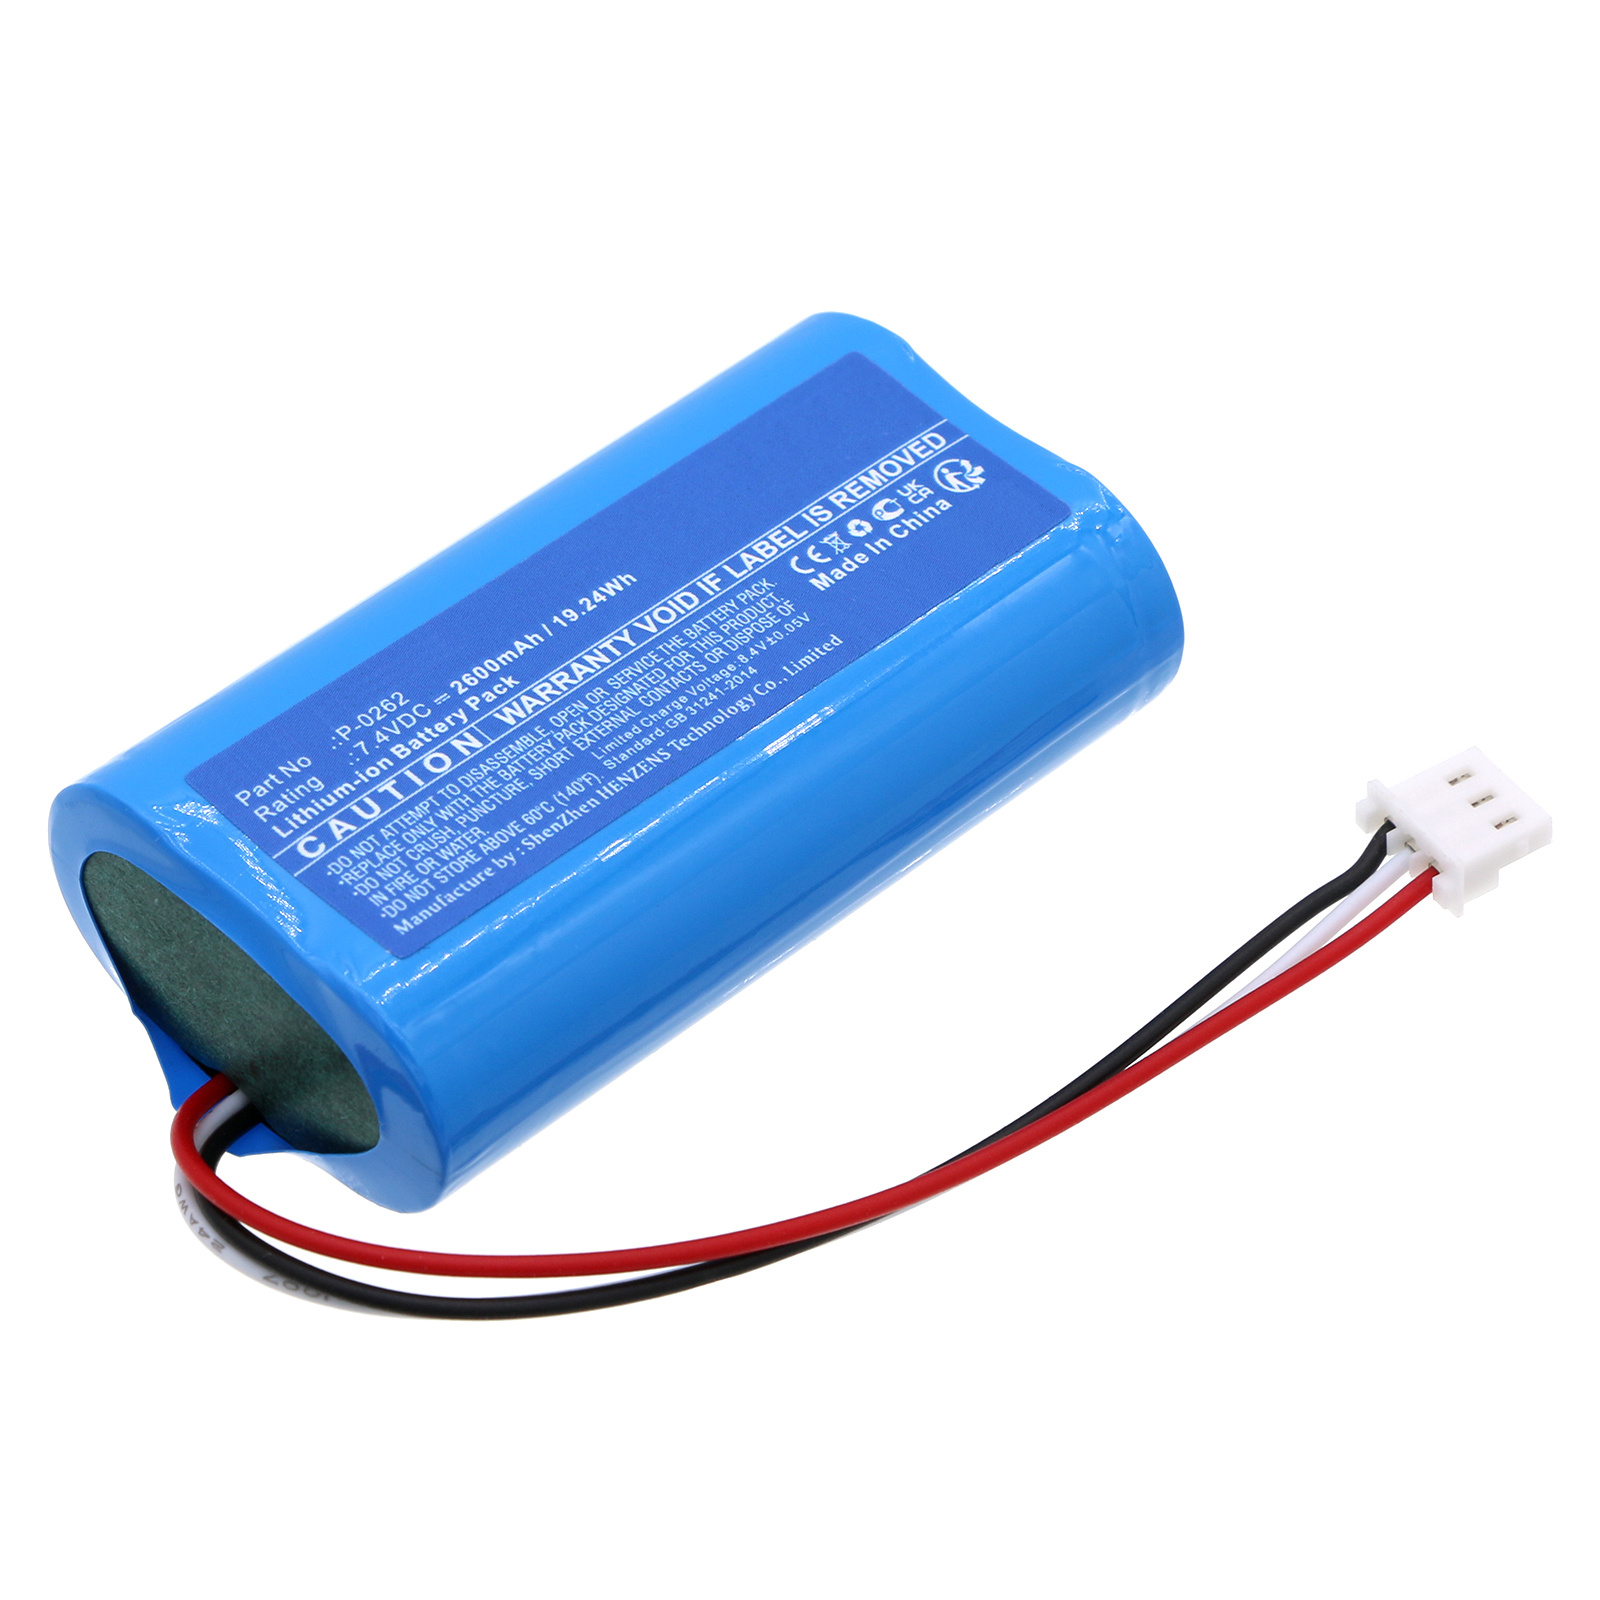 Batteries for GALEBCredit Card Reader